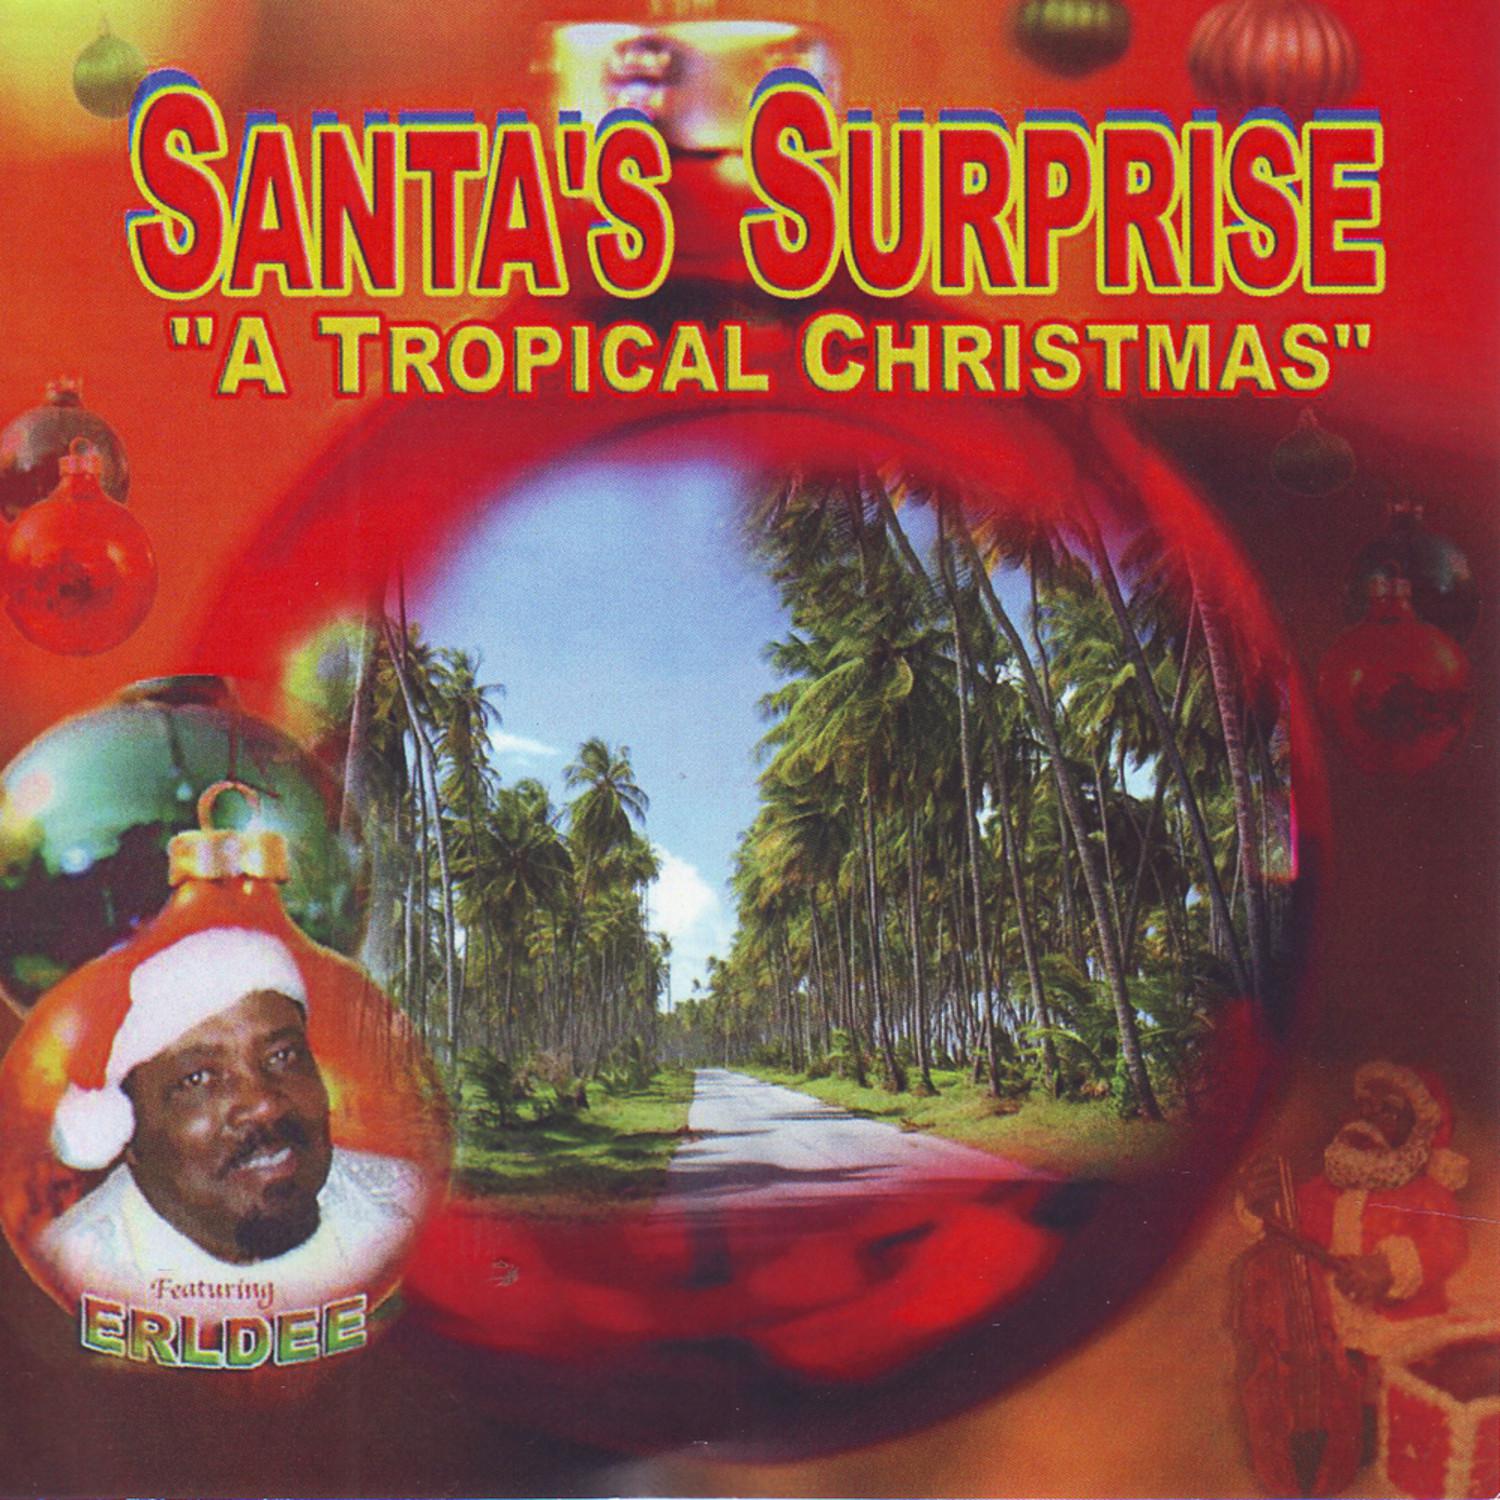 Santa's Surprise "A Tropical Christmas"